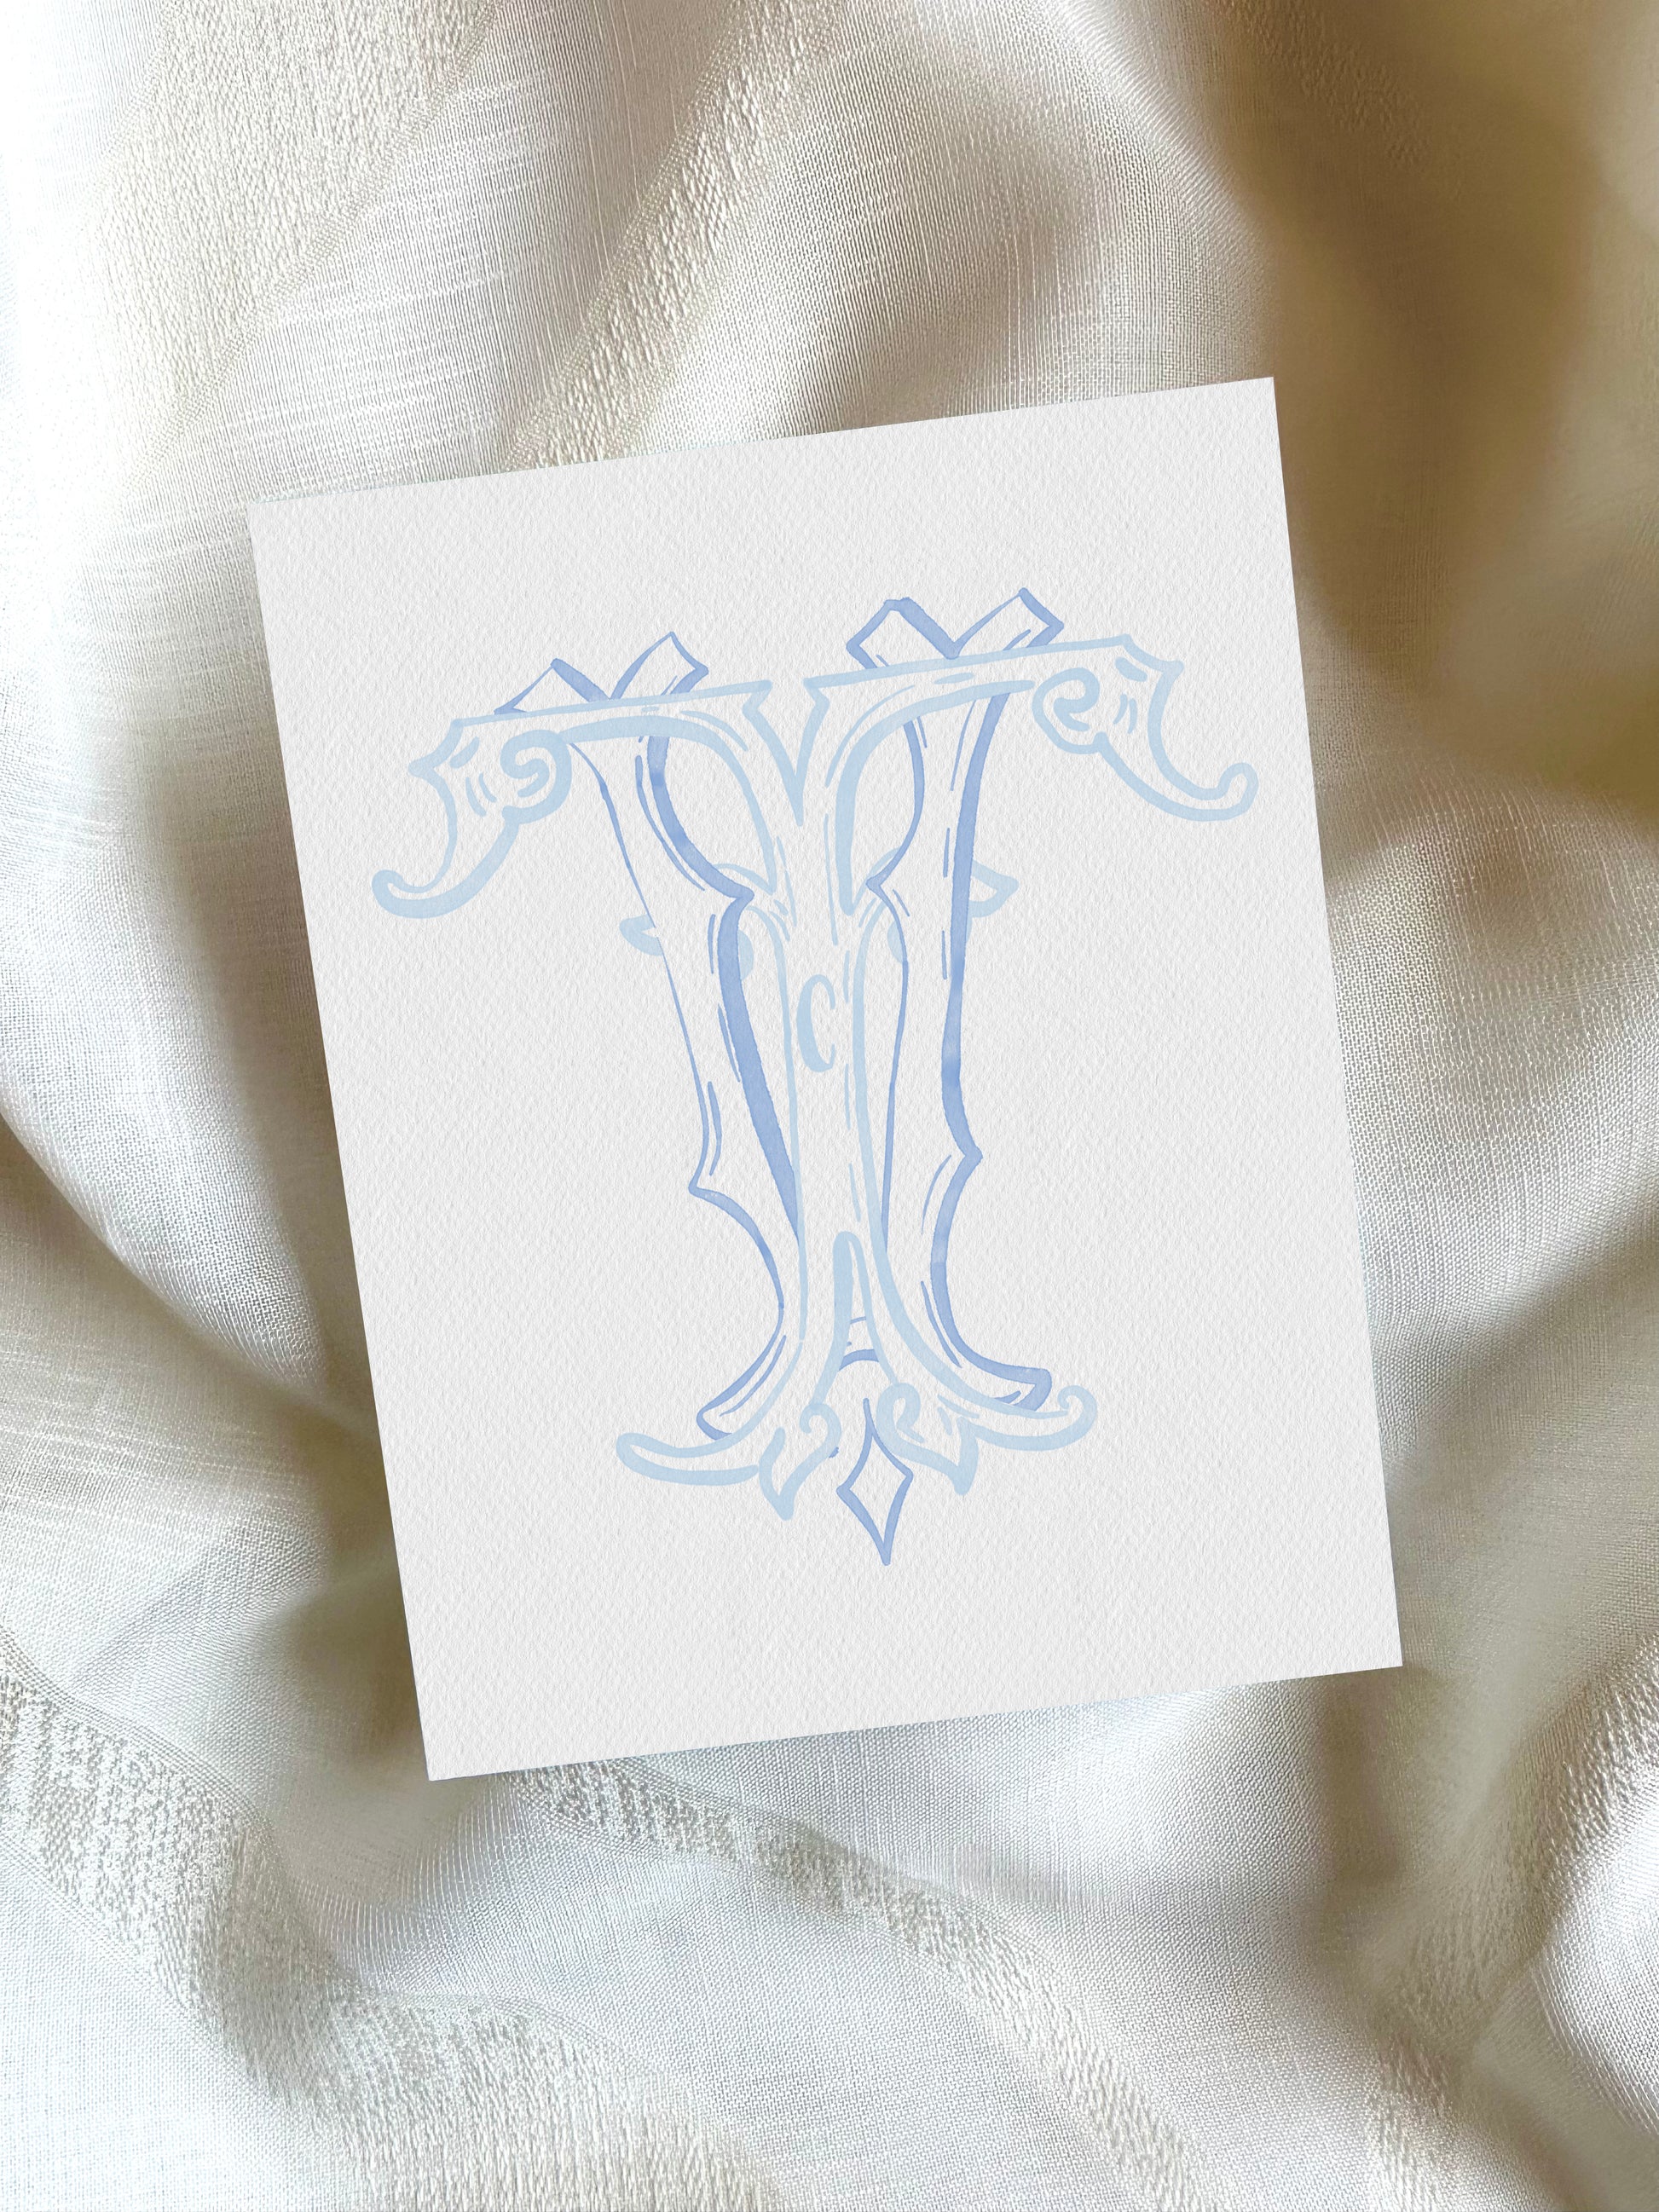 2 Letter Monogram with Letters TV VT | Digital Download - Wedding Monogram SVG, Personal Logo, Wedding Logo for Wedding Invitations The Wedding Crest Lab